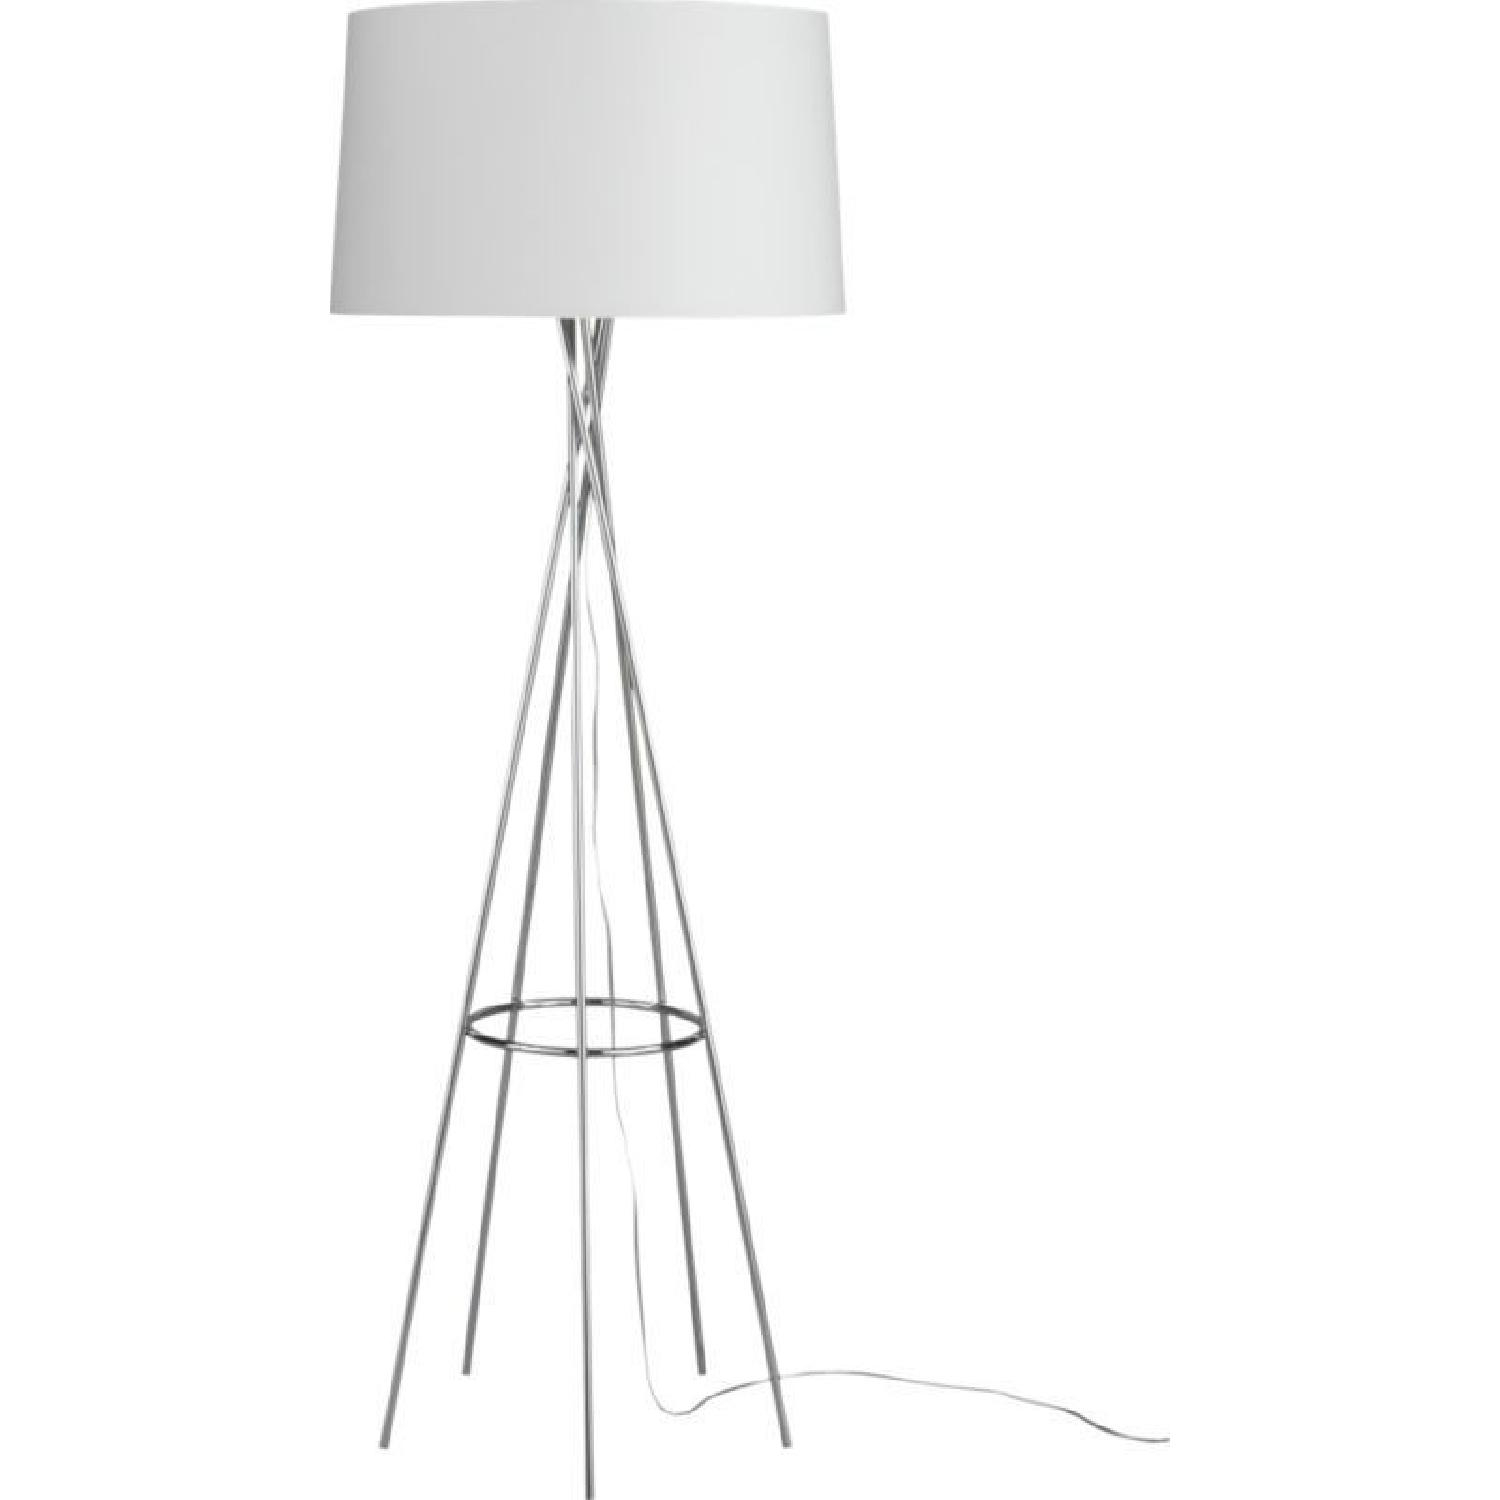 Cb2 Twine Floor Lamp Aptdeco within proportions 1500 X 1500